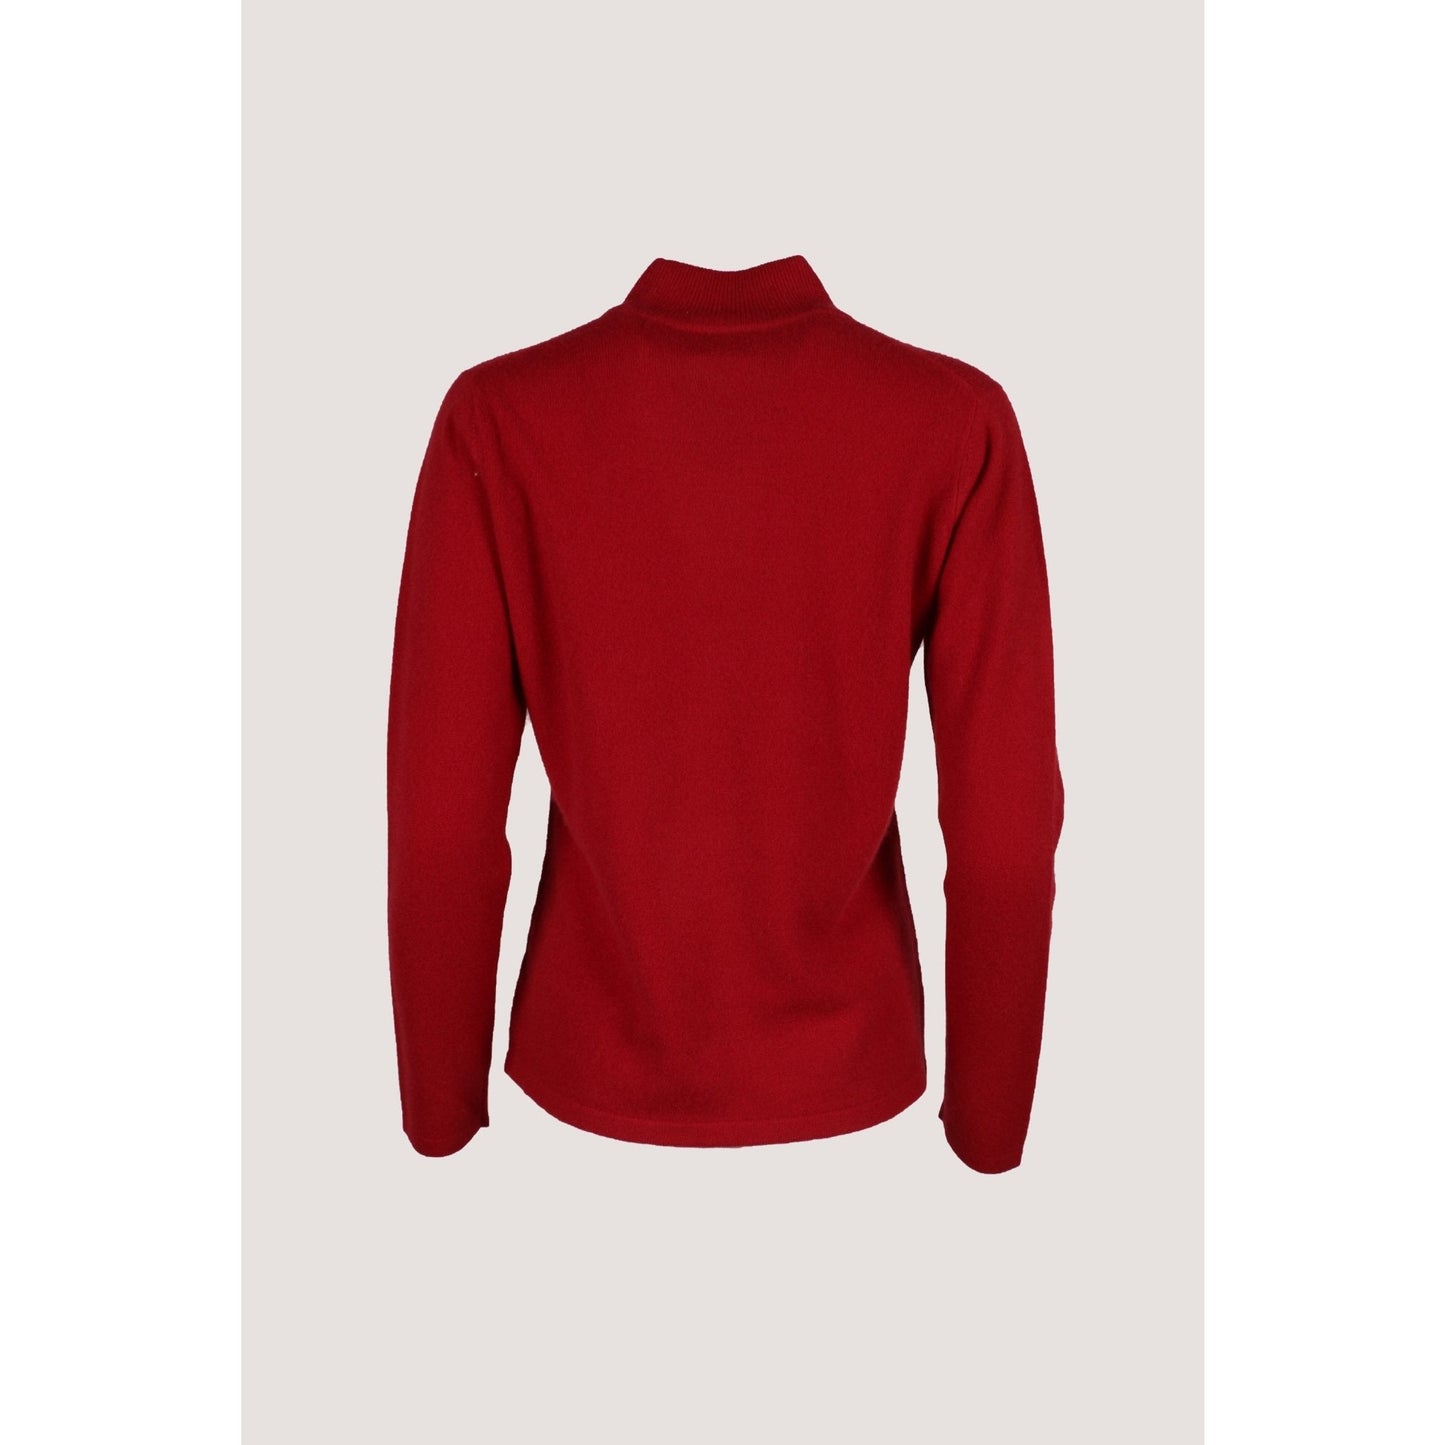 Half Roll Neck Sweater Red - Crumpet Chowk